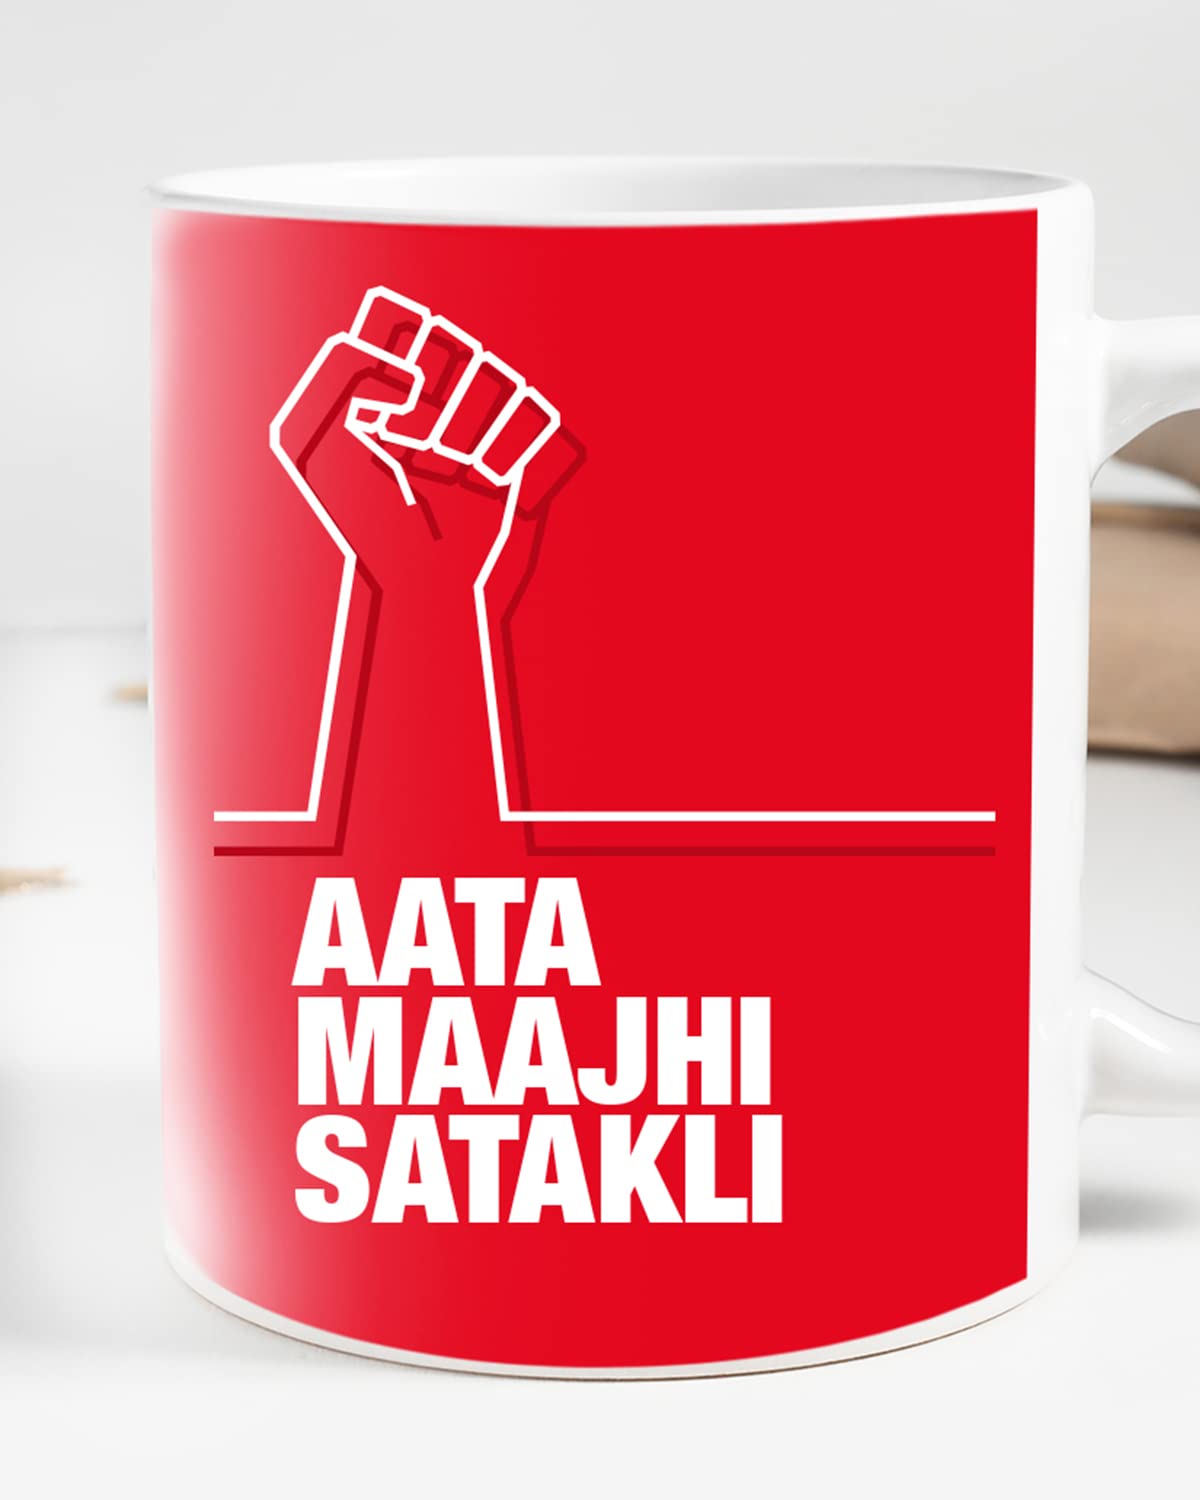 AATA MAAJHI SATAKLI Coffee Mug - Gift for Friend, Birthday Gift, Birthday Mug, Motivational Quotes Mug, Mugs with Funny & Funky Dialogues, Bollywood Mugs, Funny Mugs for Him & Her